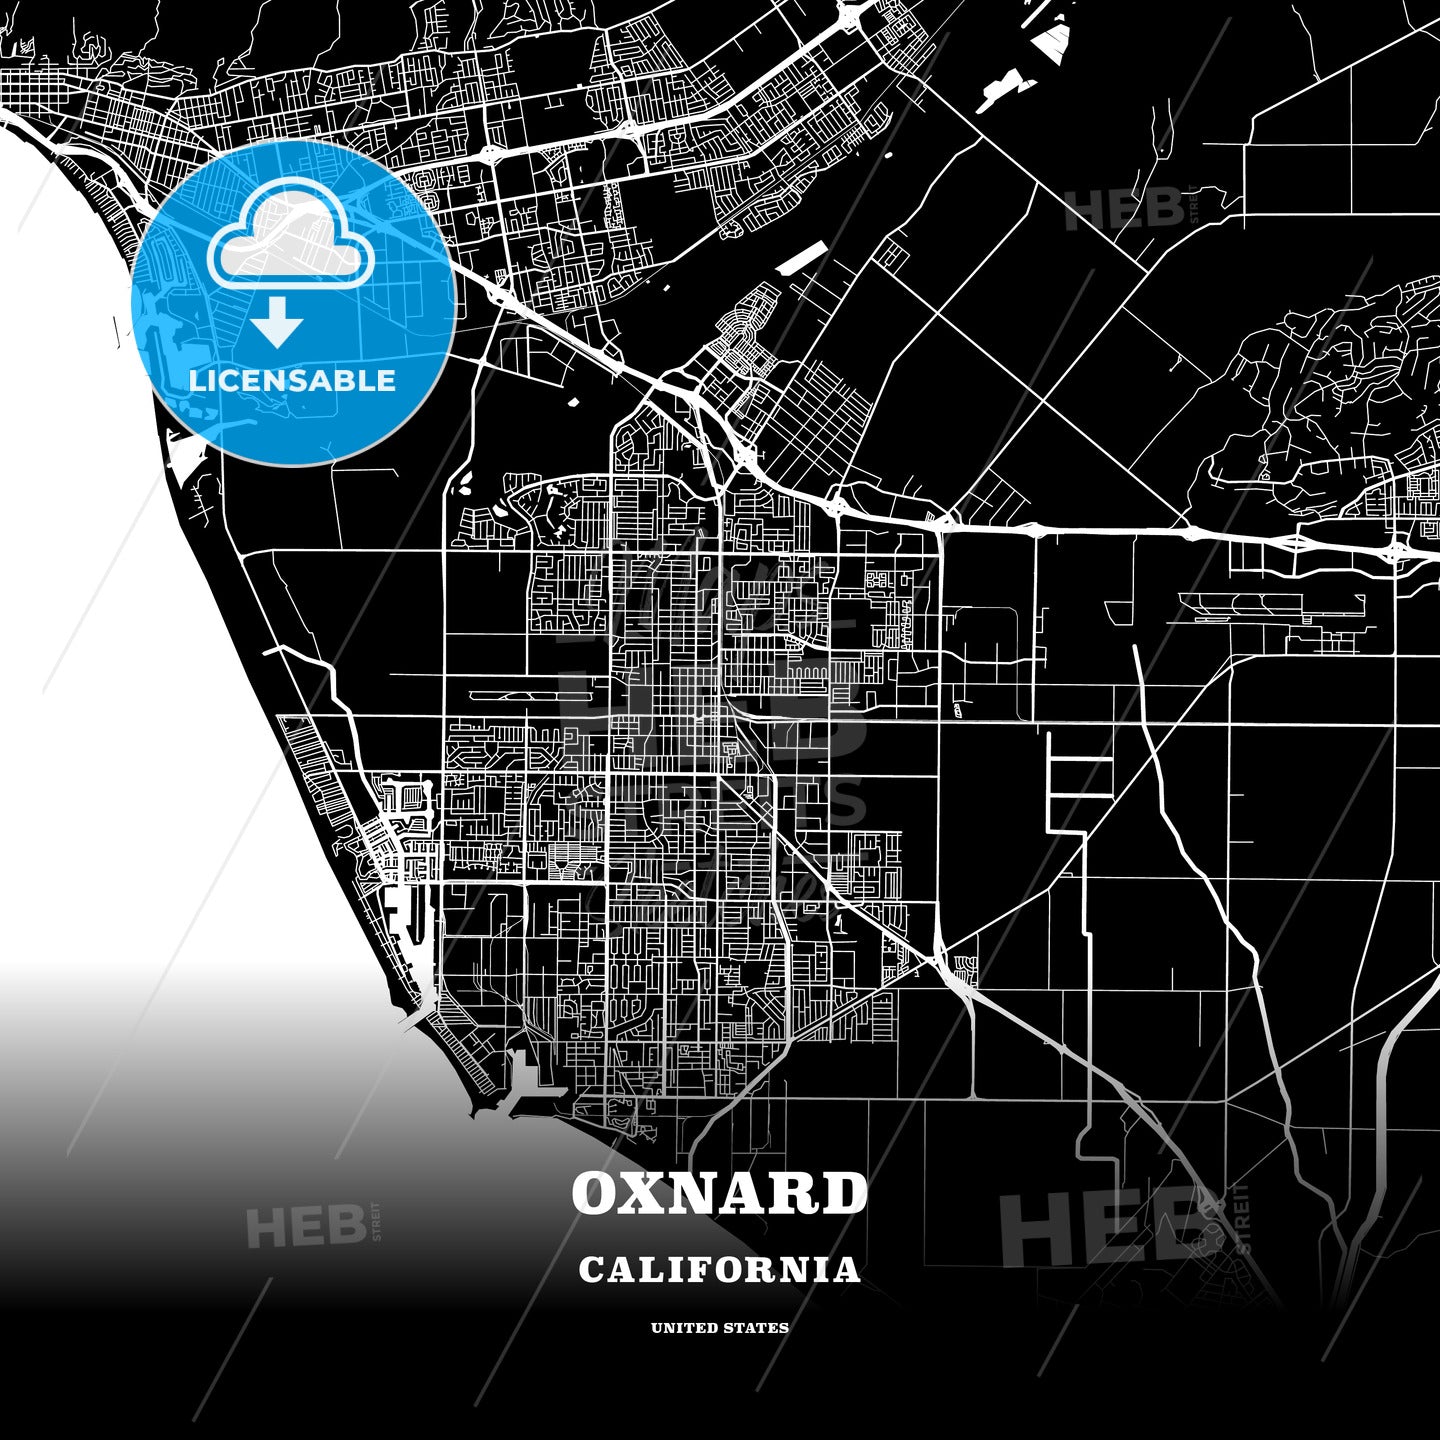 Oxnard, California, USA map